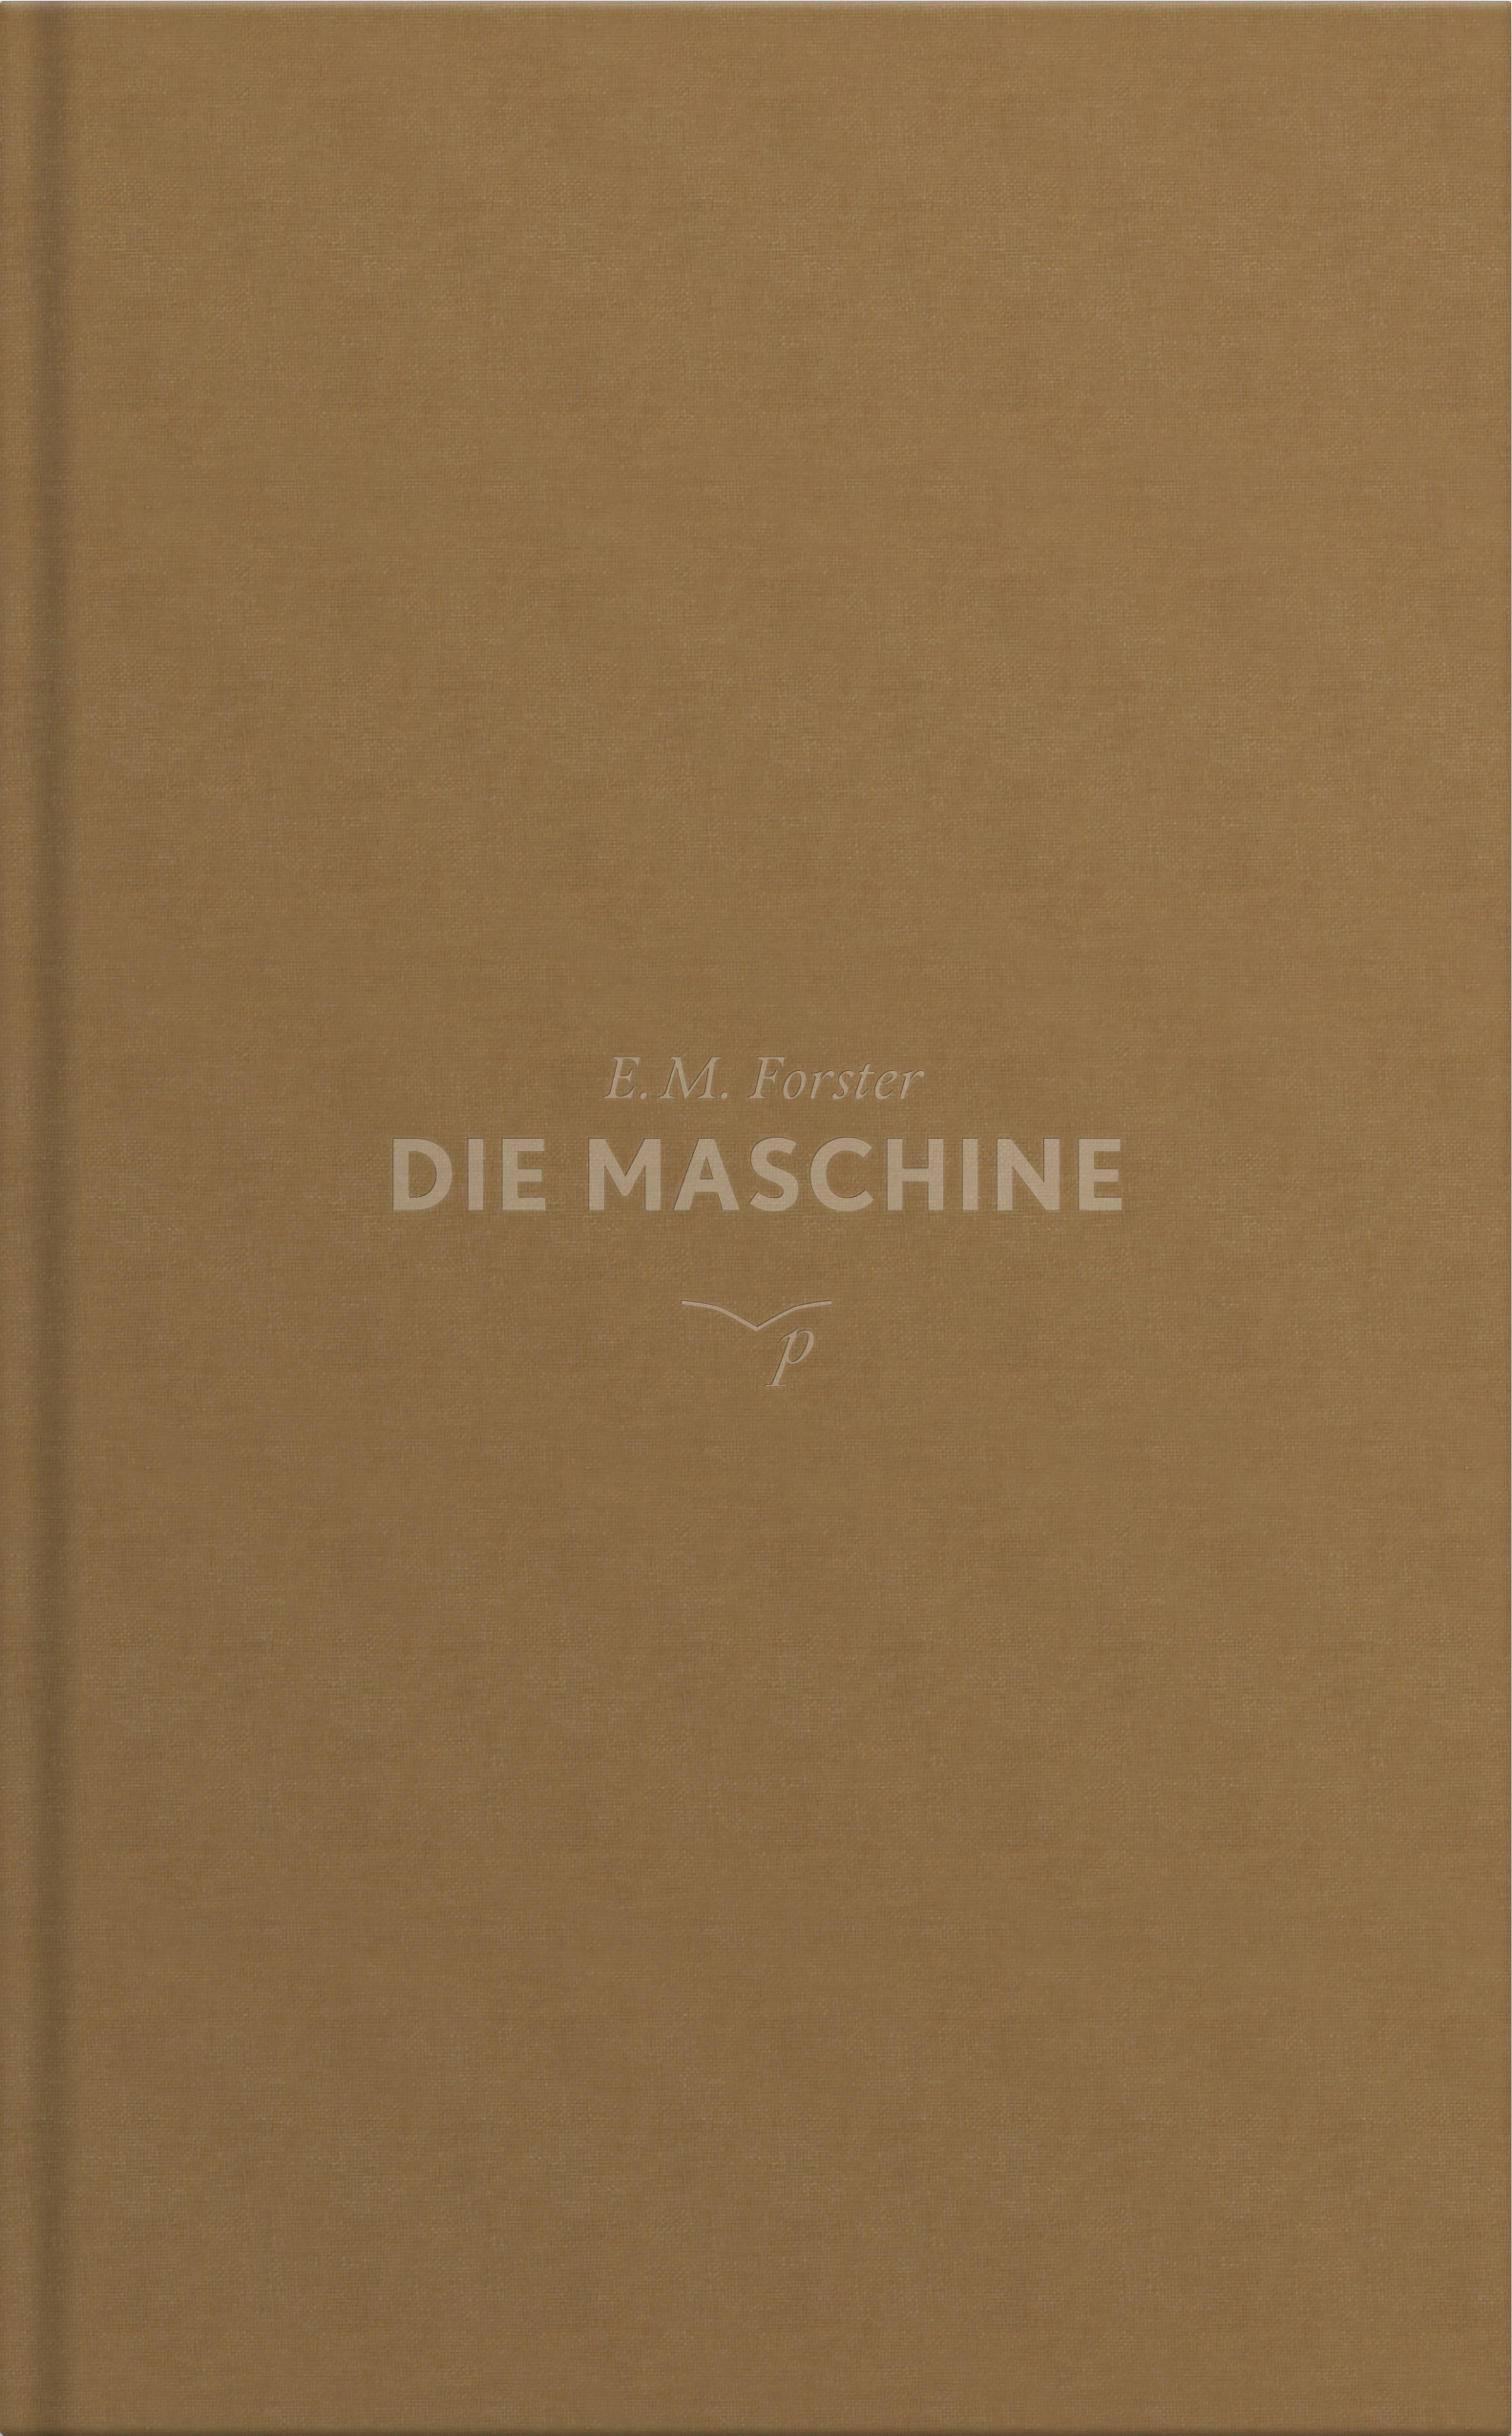 Cover „Die Maschine“